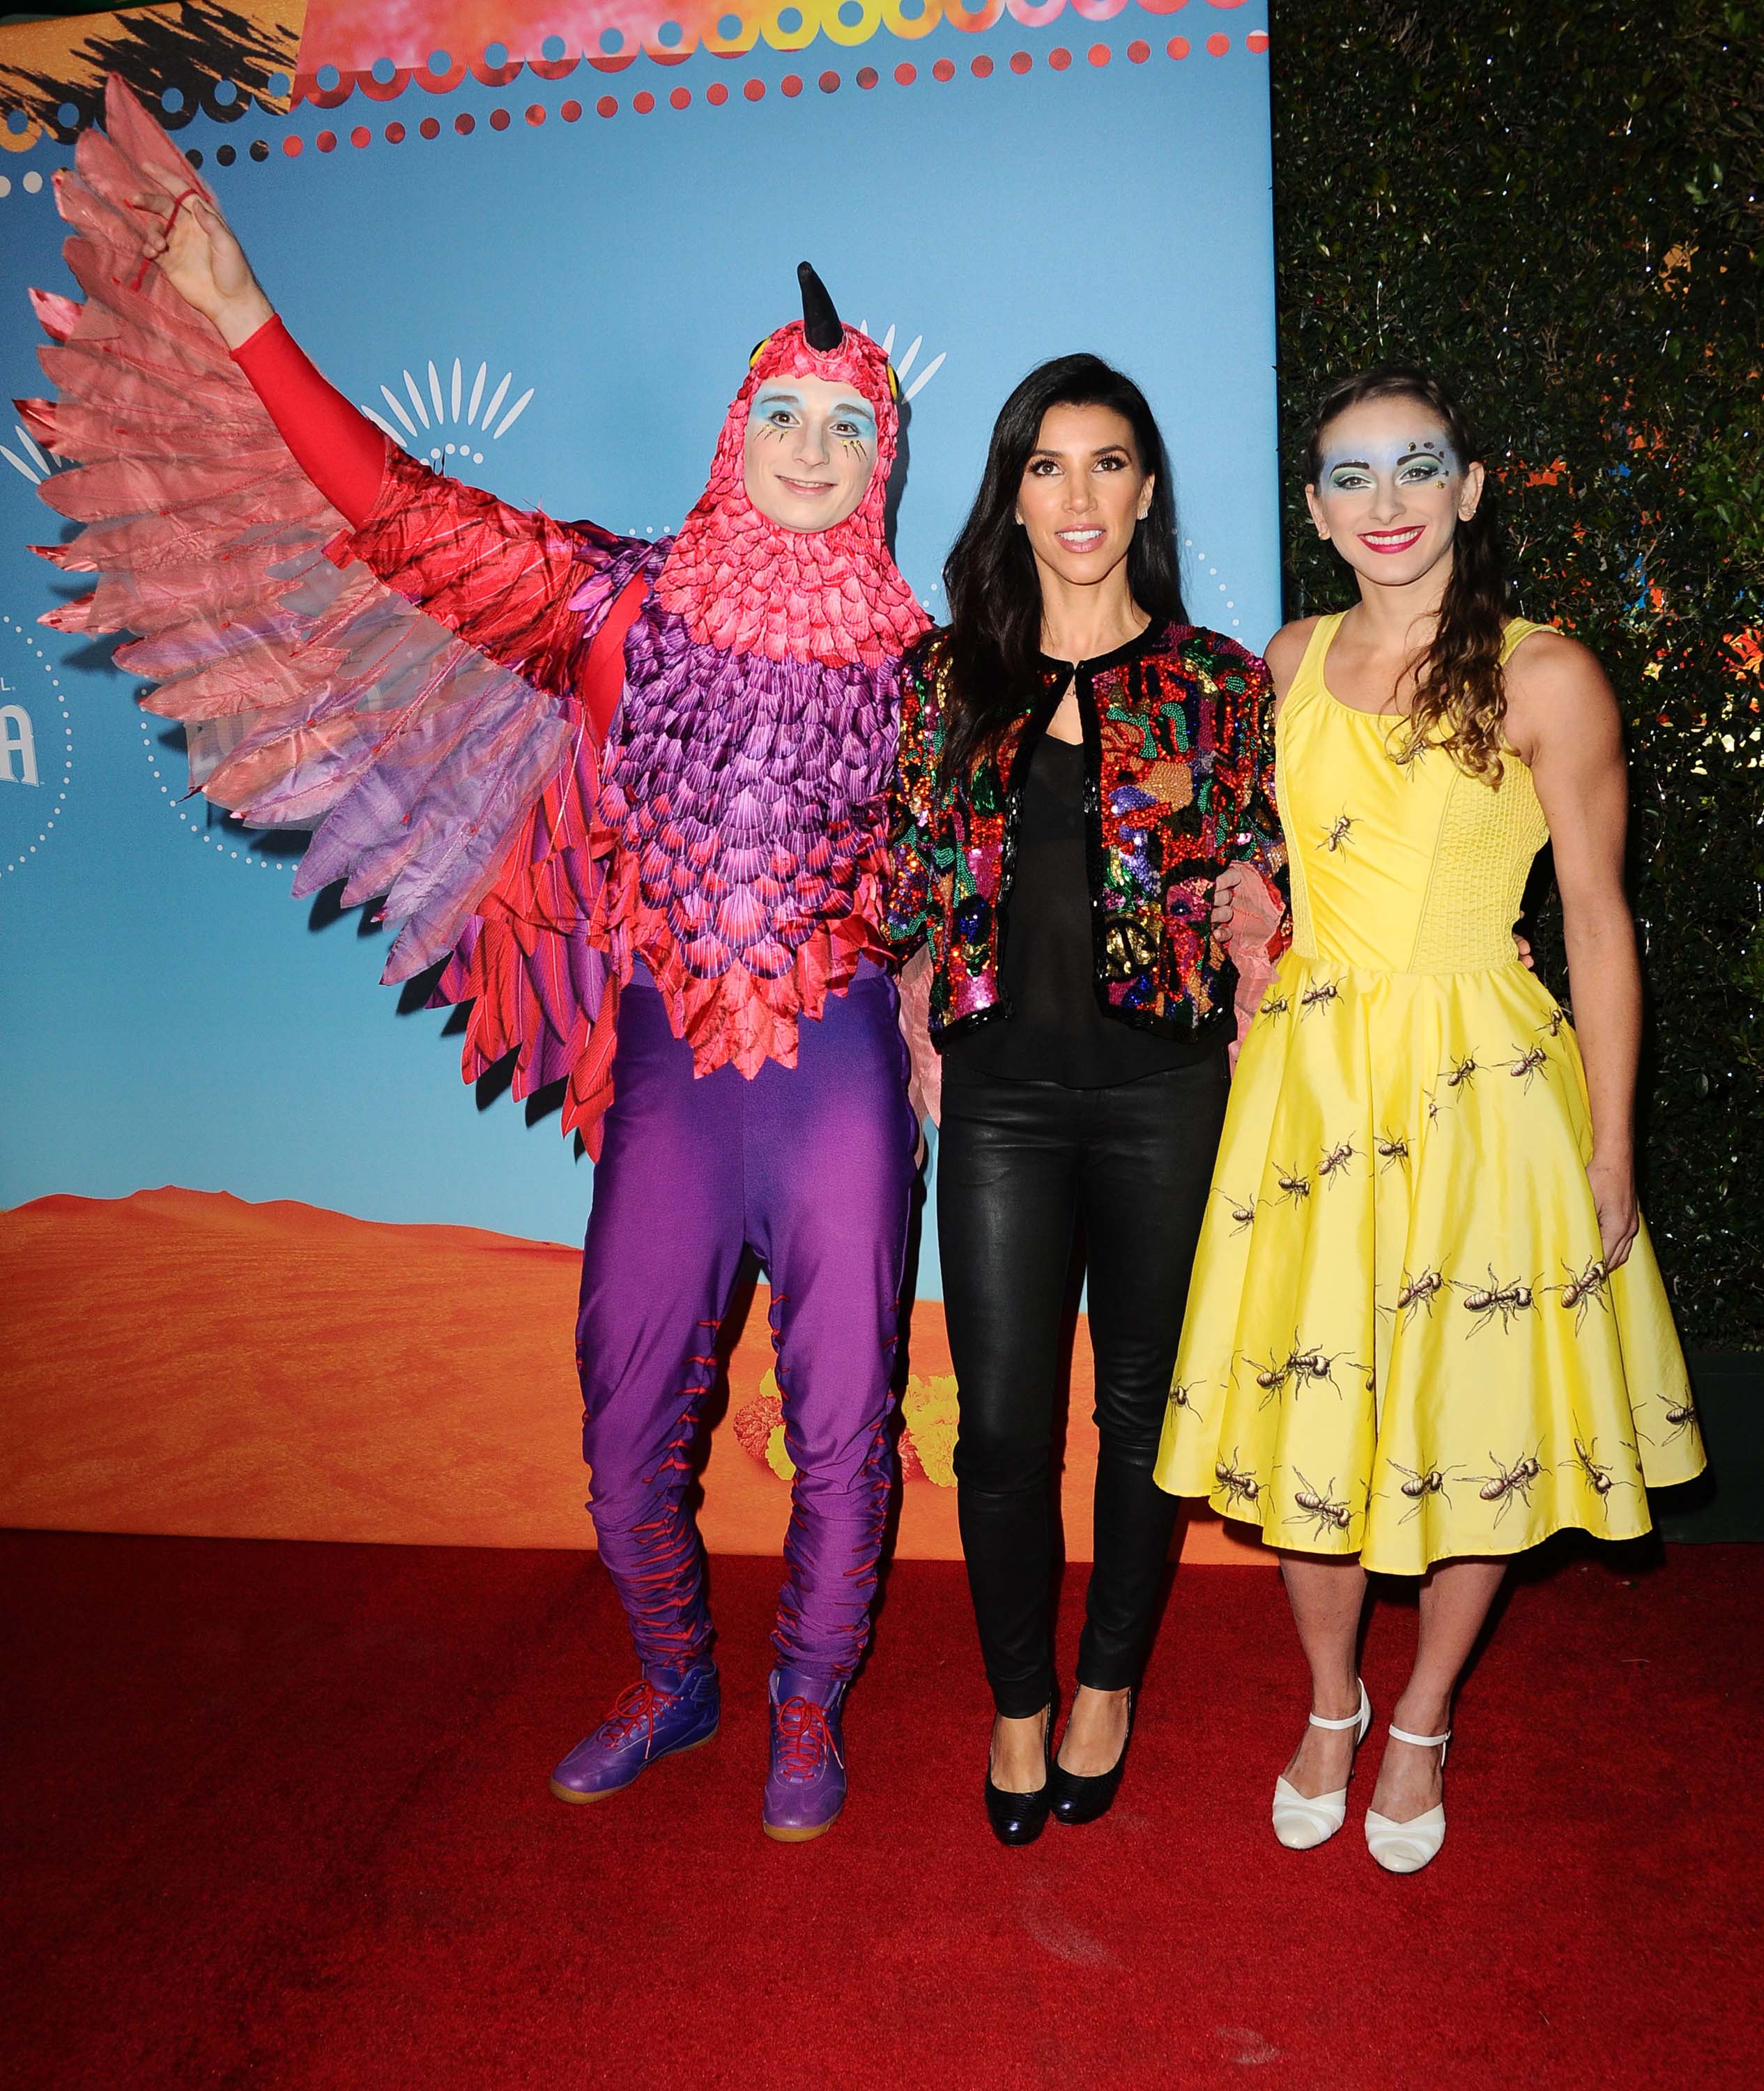 Adrianna Costa attends Premiere of Cirque du Soleil’s production LUZIA